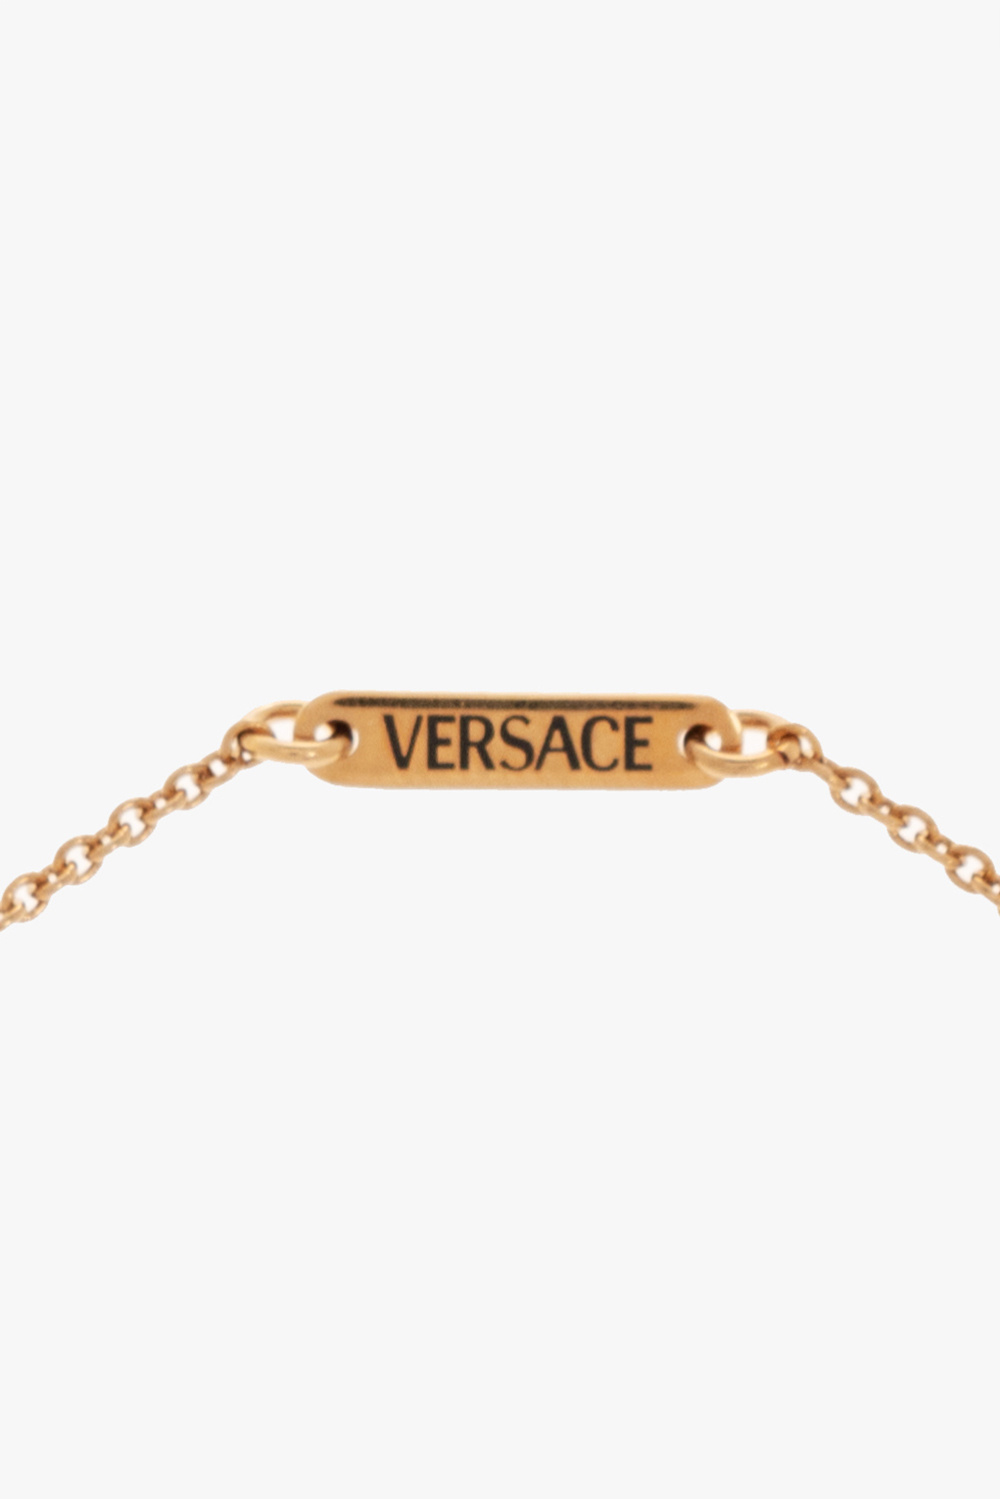 Versace Medusa head bracelet